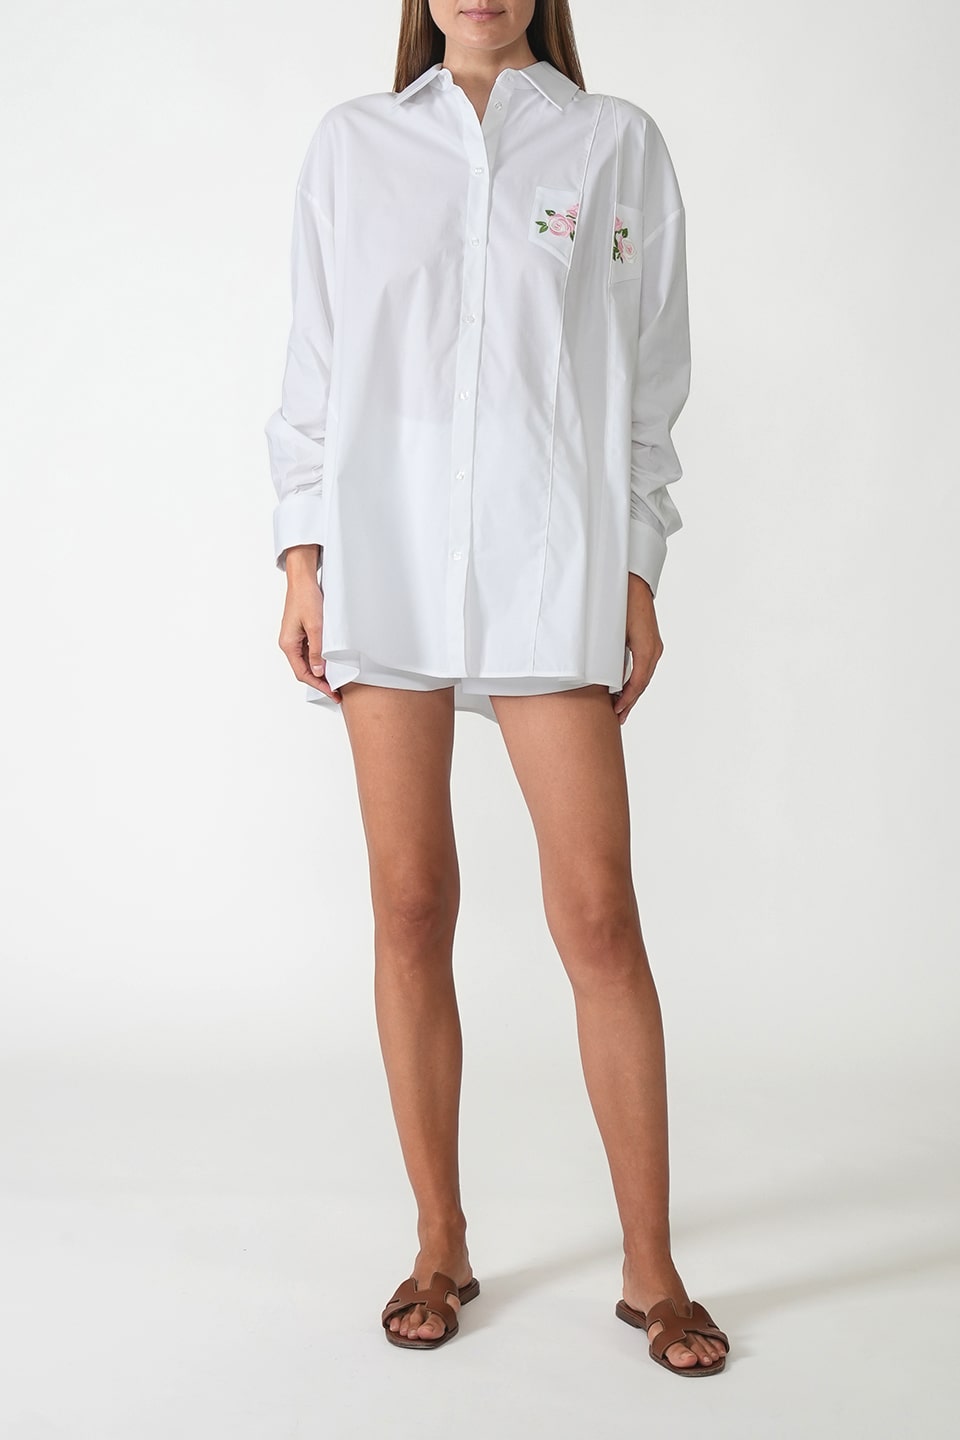 Shop online trendy White Women long sleeve from Vivetta Fashion designer. Product gallery 1